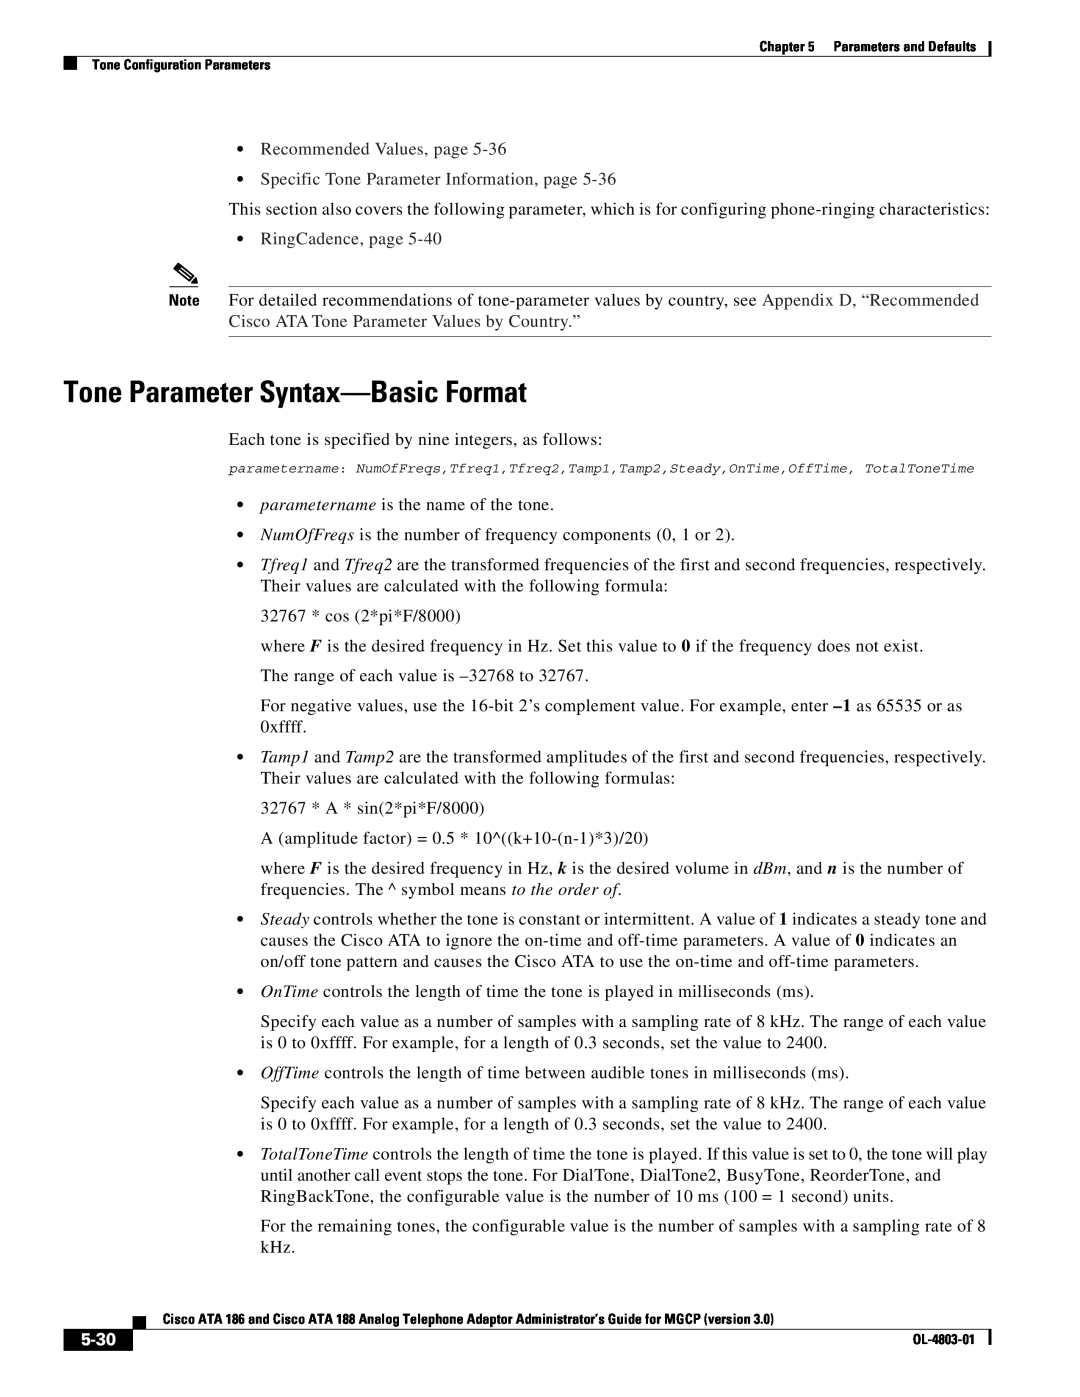 Cisco Systems ATA 186 manual Tone Parameter Syntax-Basic Format, 5-30, RingCadence, page 